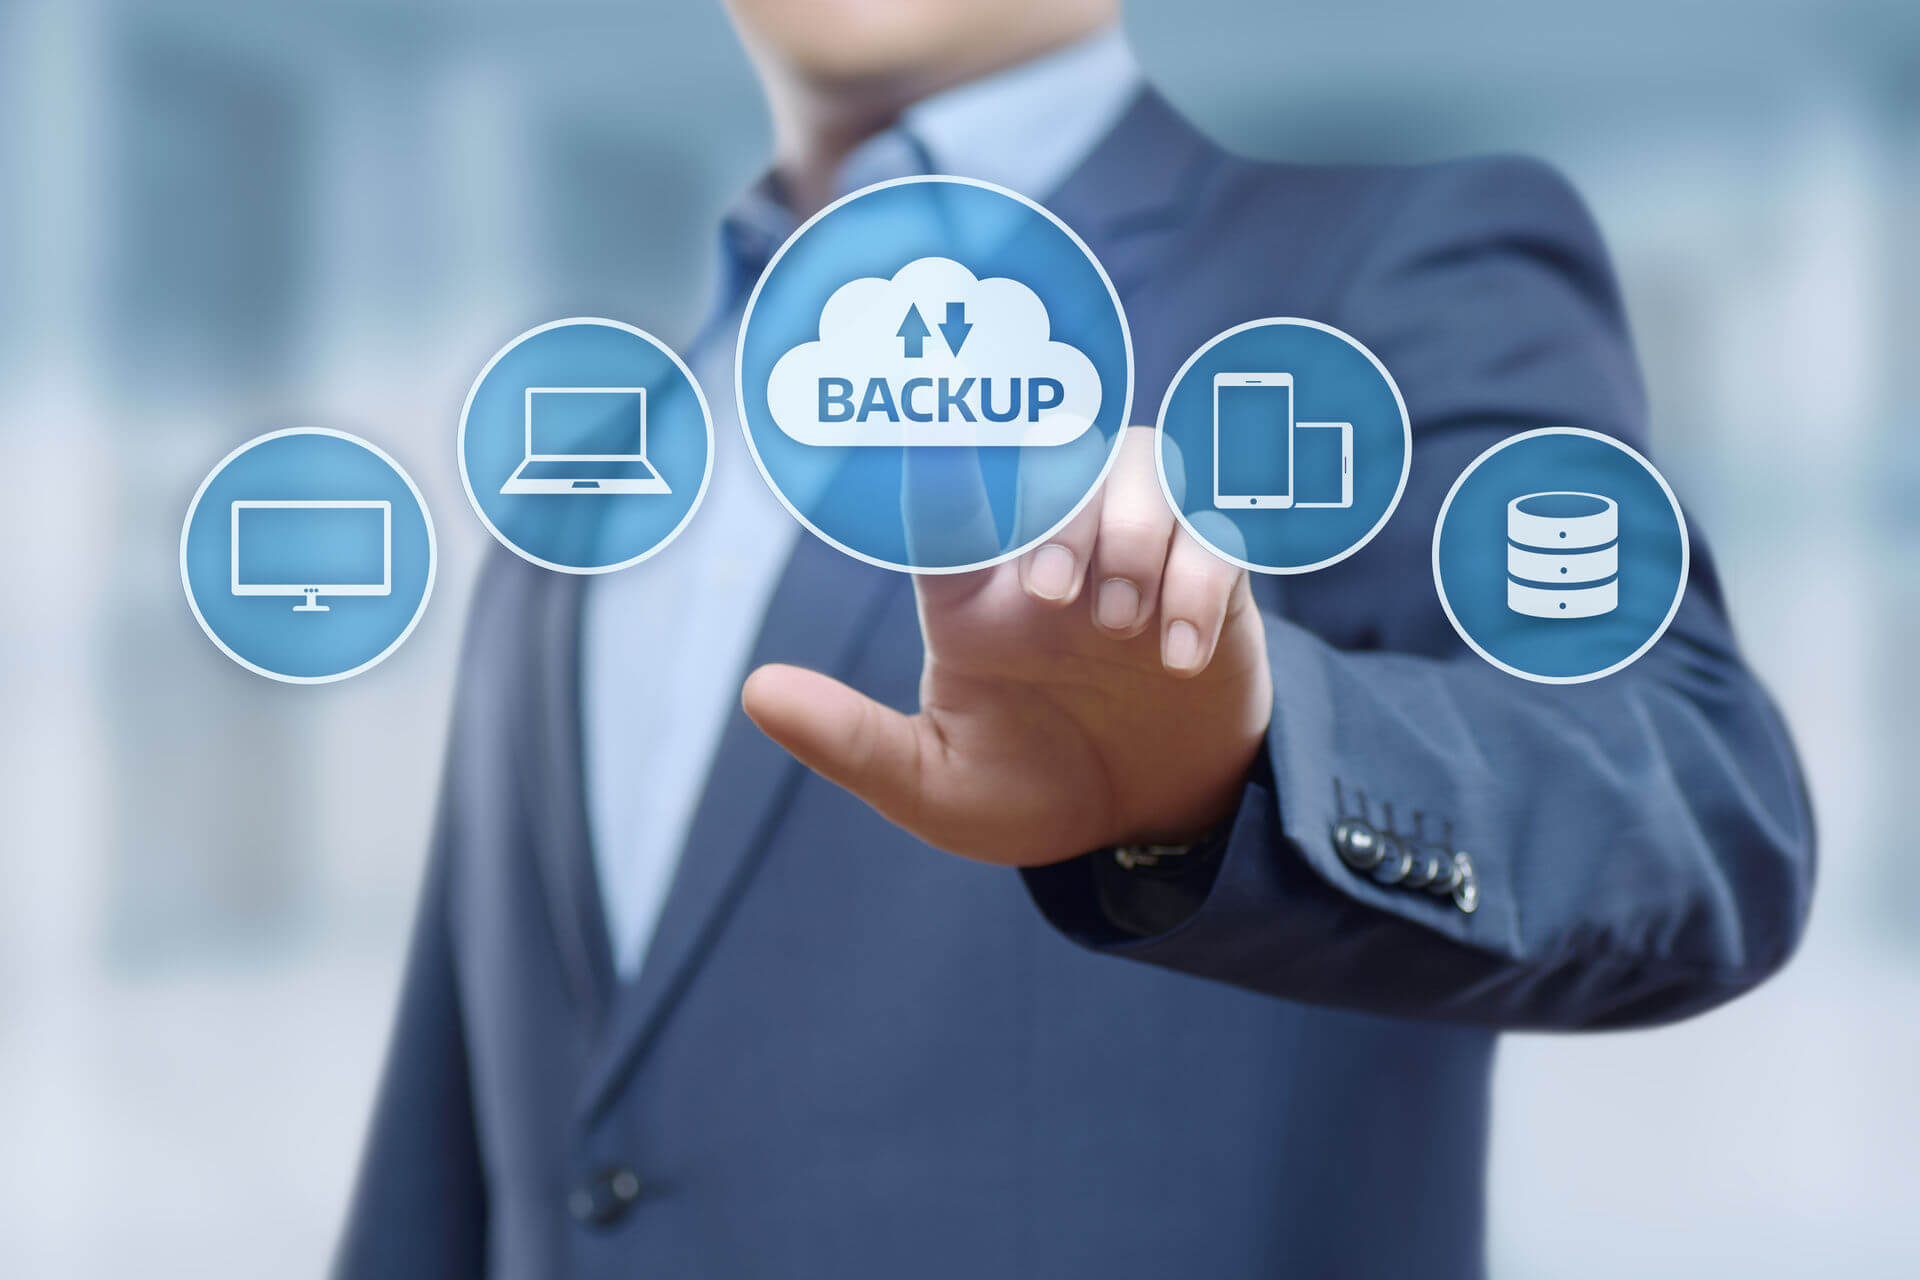 enterprise laptop backup software